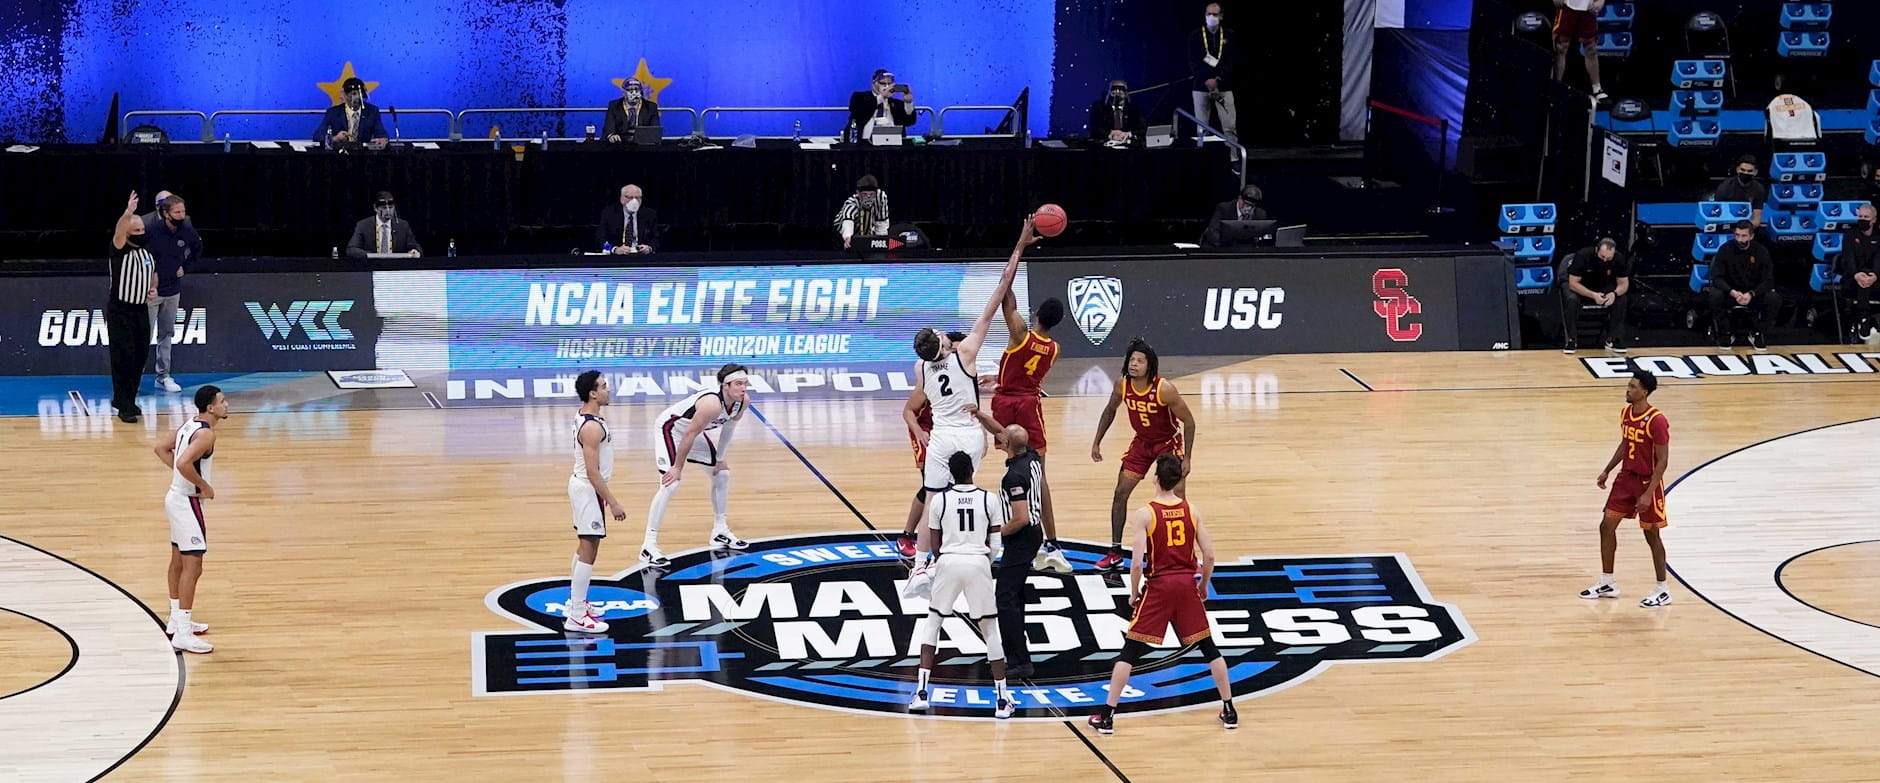 USC Trojans vs. Gonzaga Bulldogs NCAA basketball game